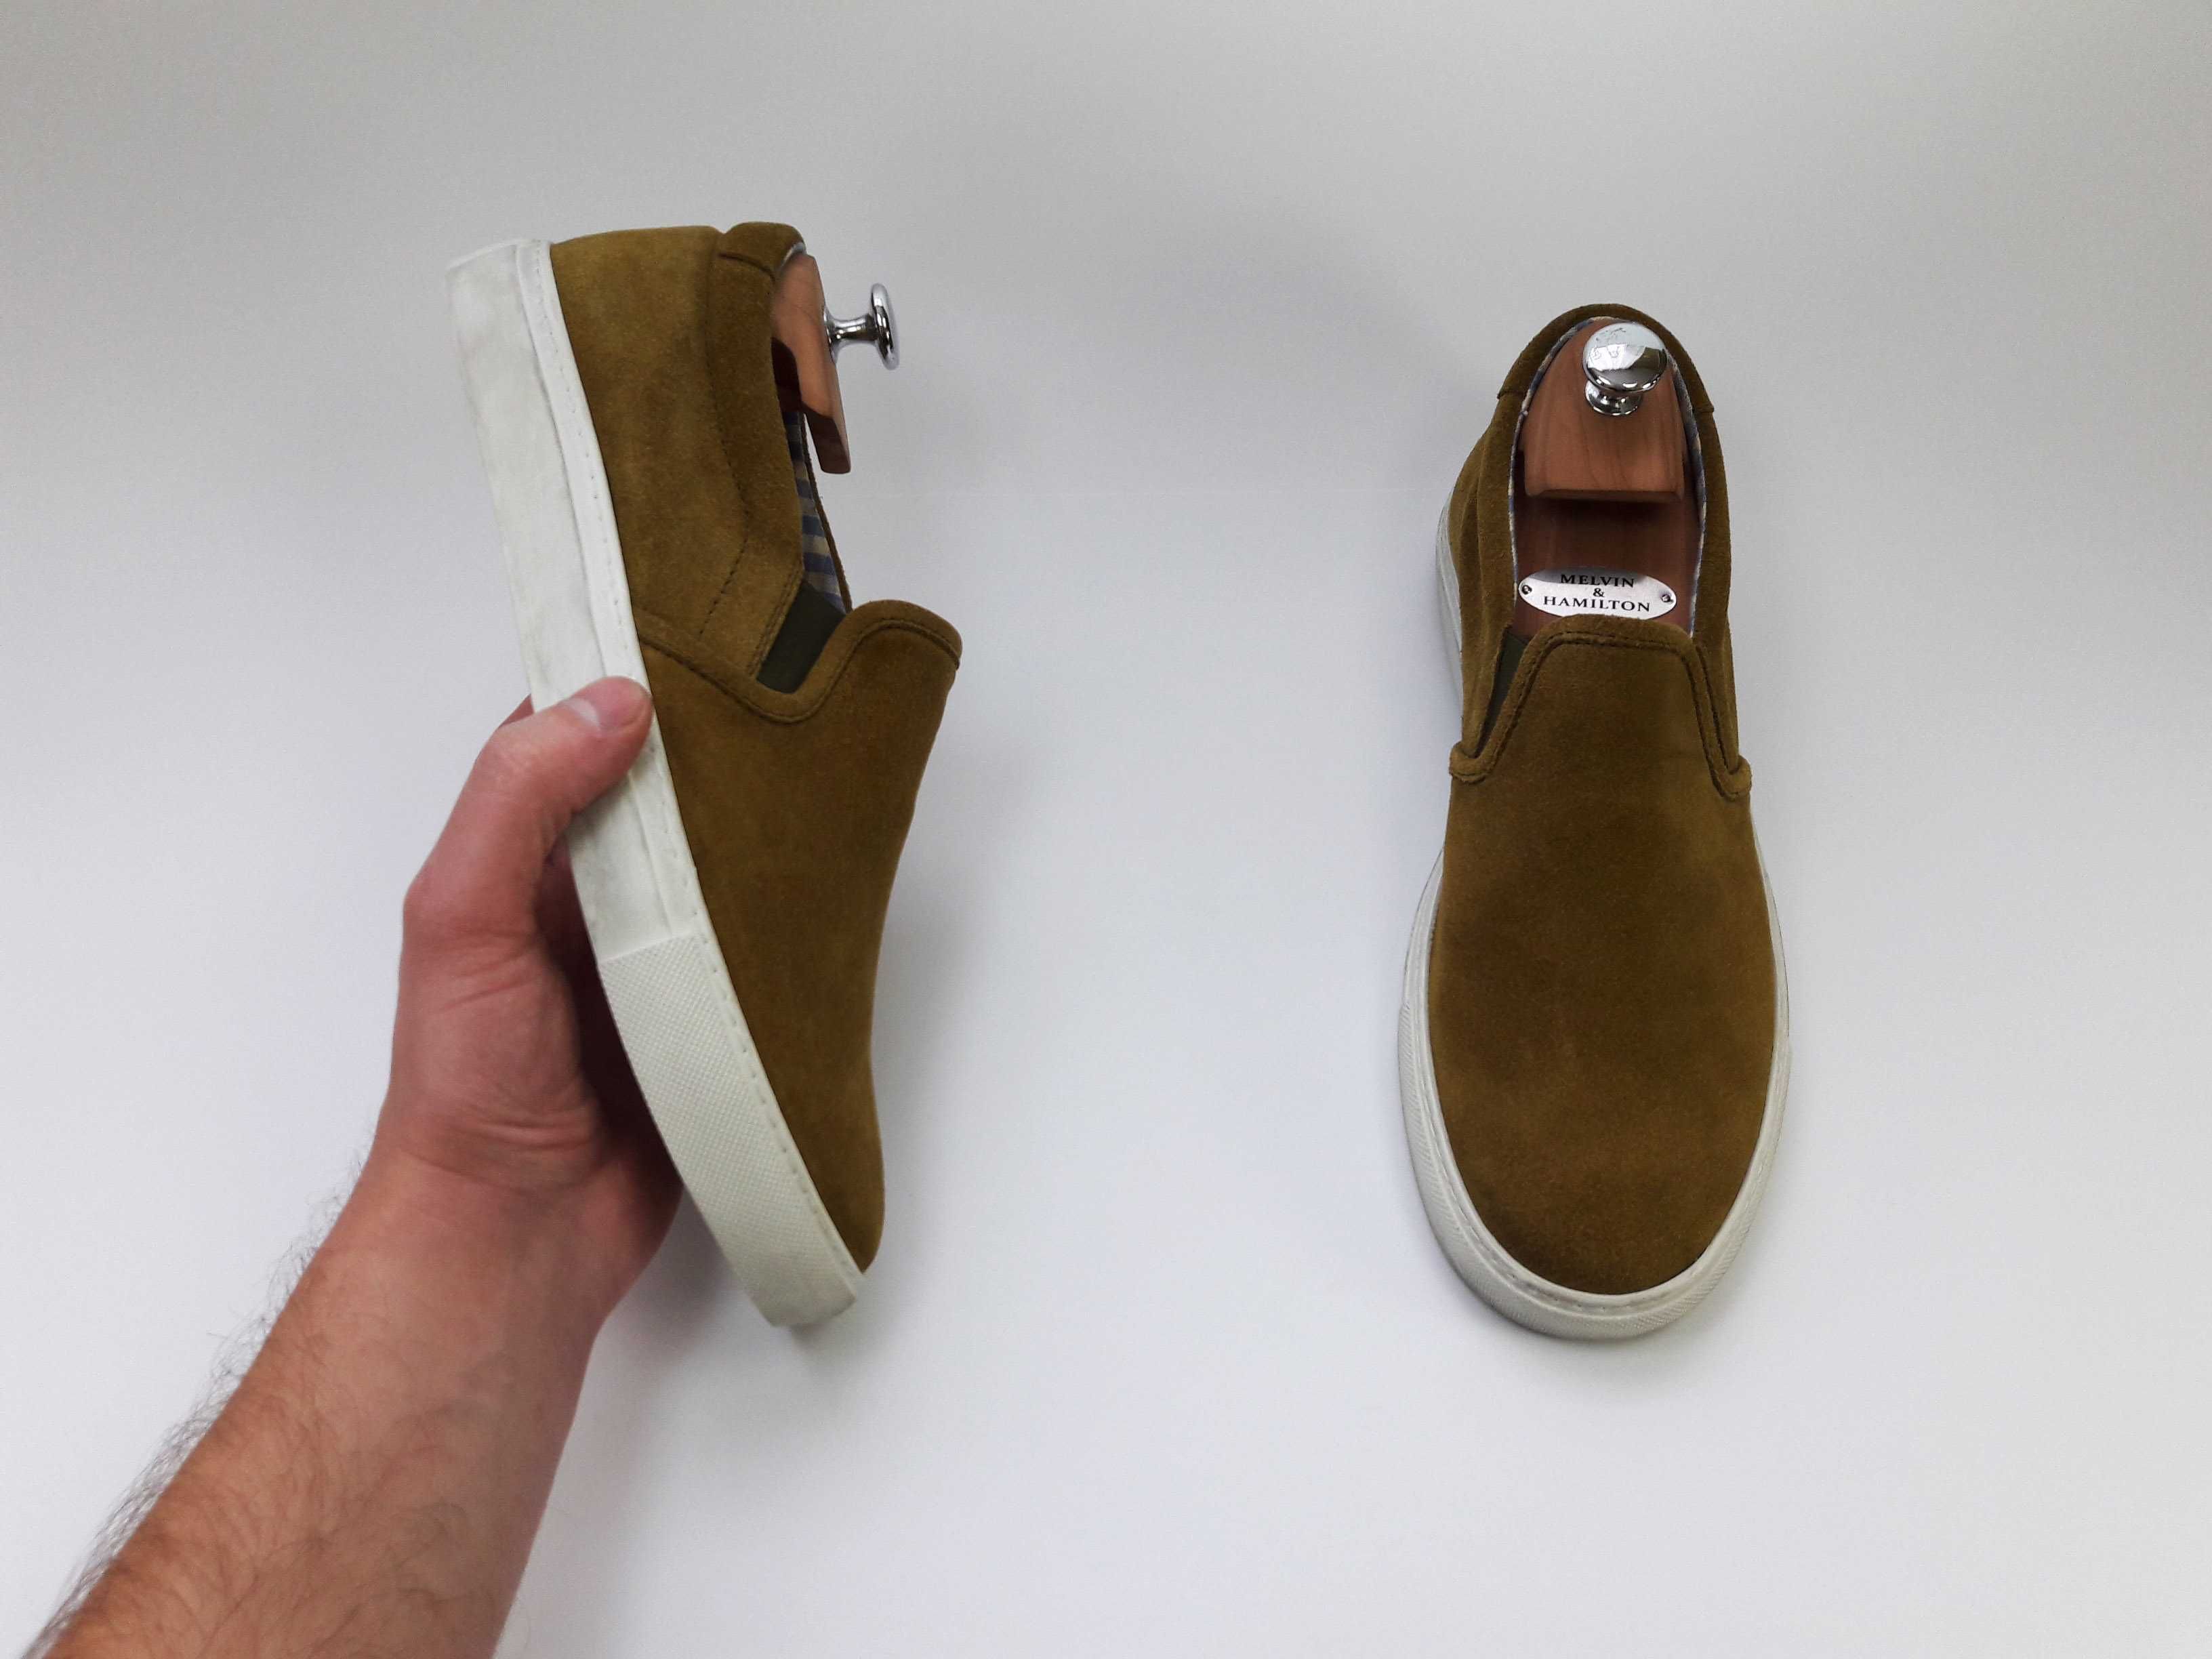 LEREW Made in Italy слипоны обувь на весну лето 41 26.5 см